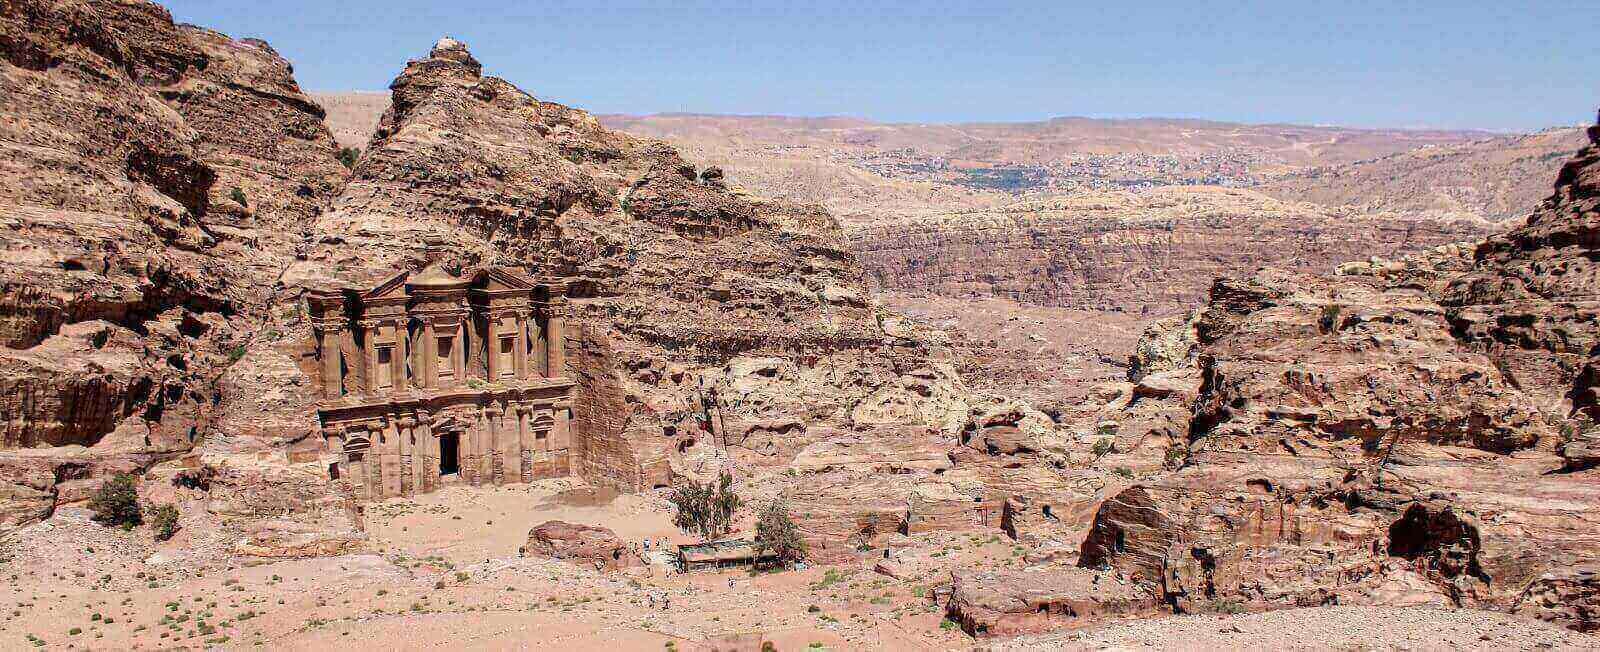 Petra-rock-cut architecture